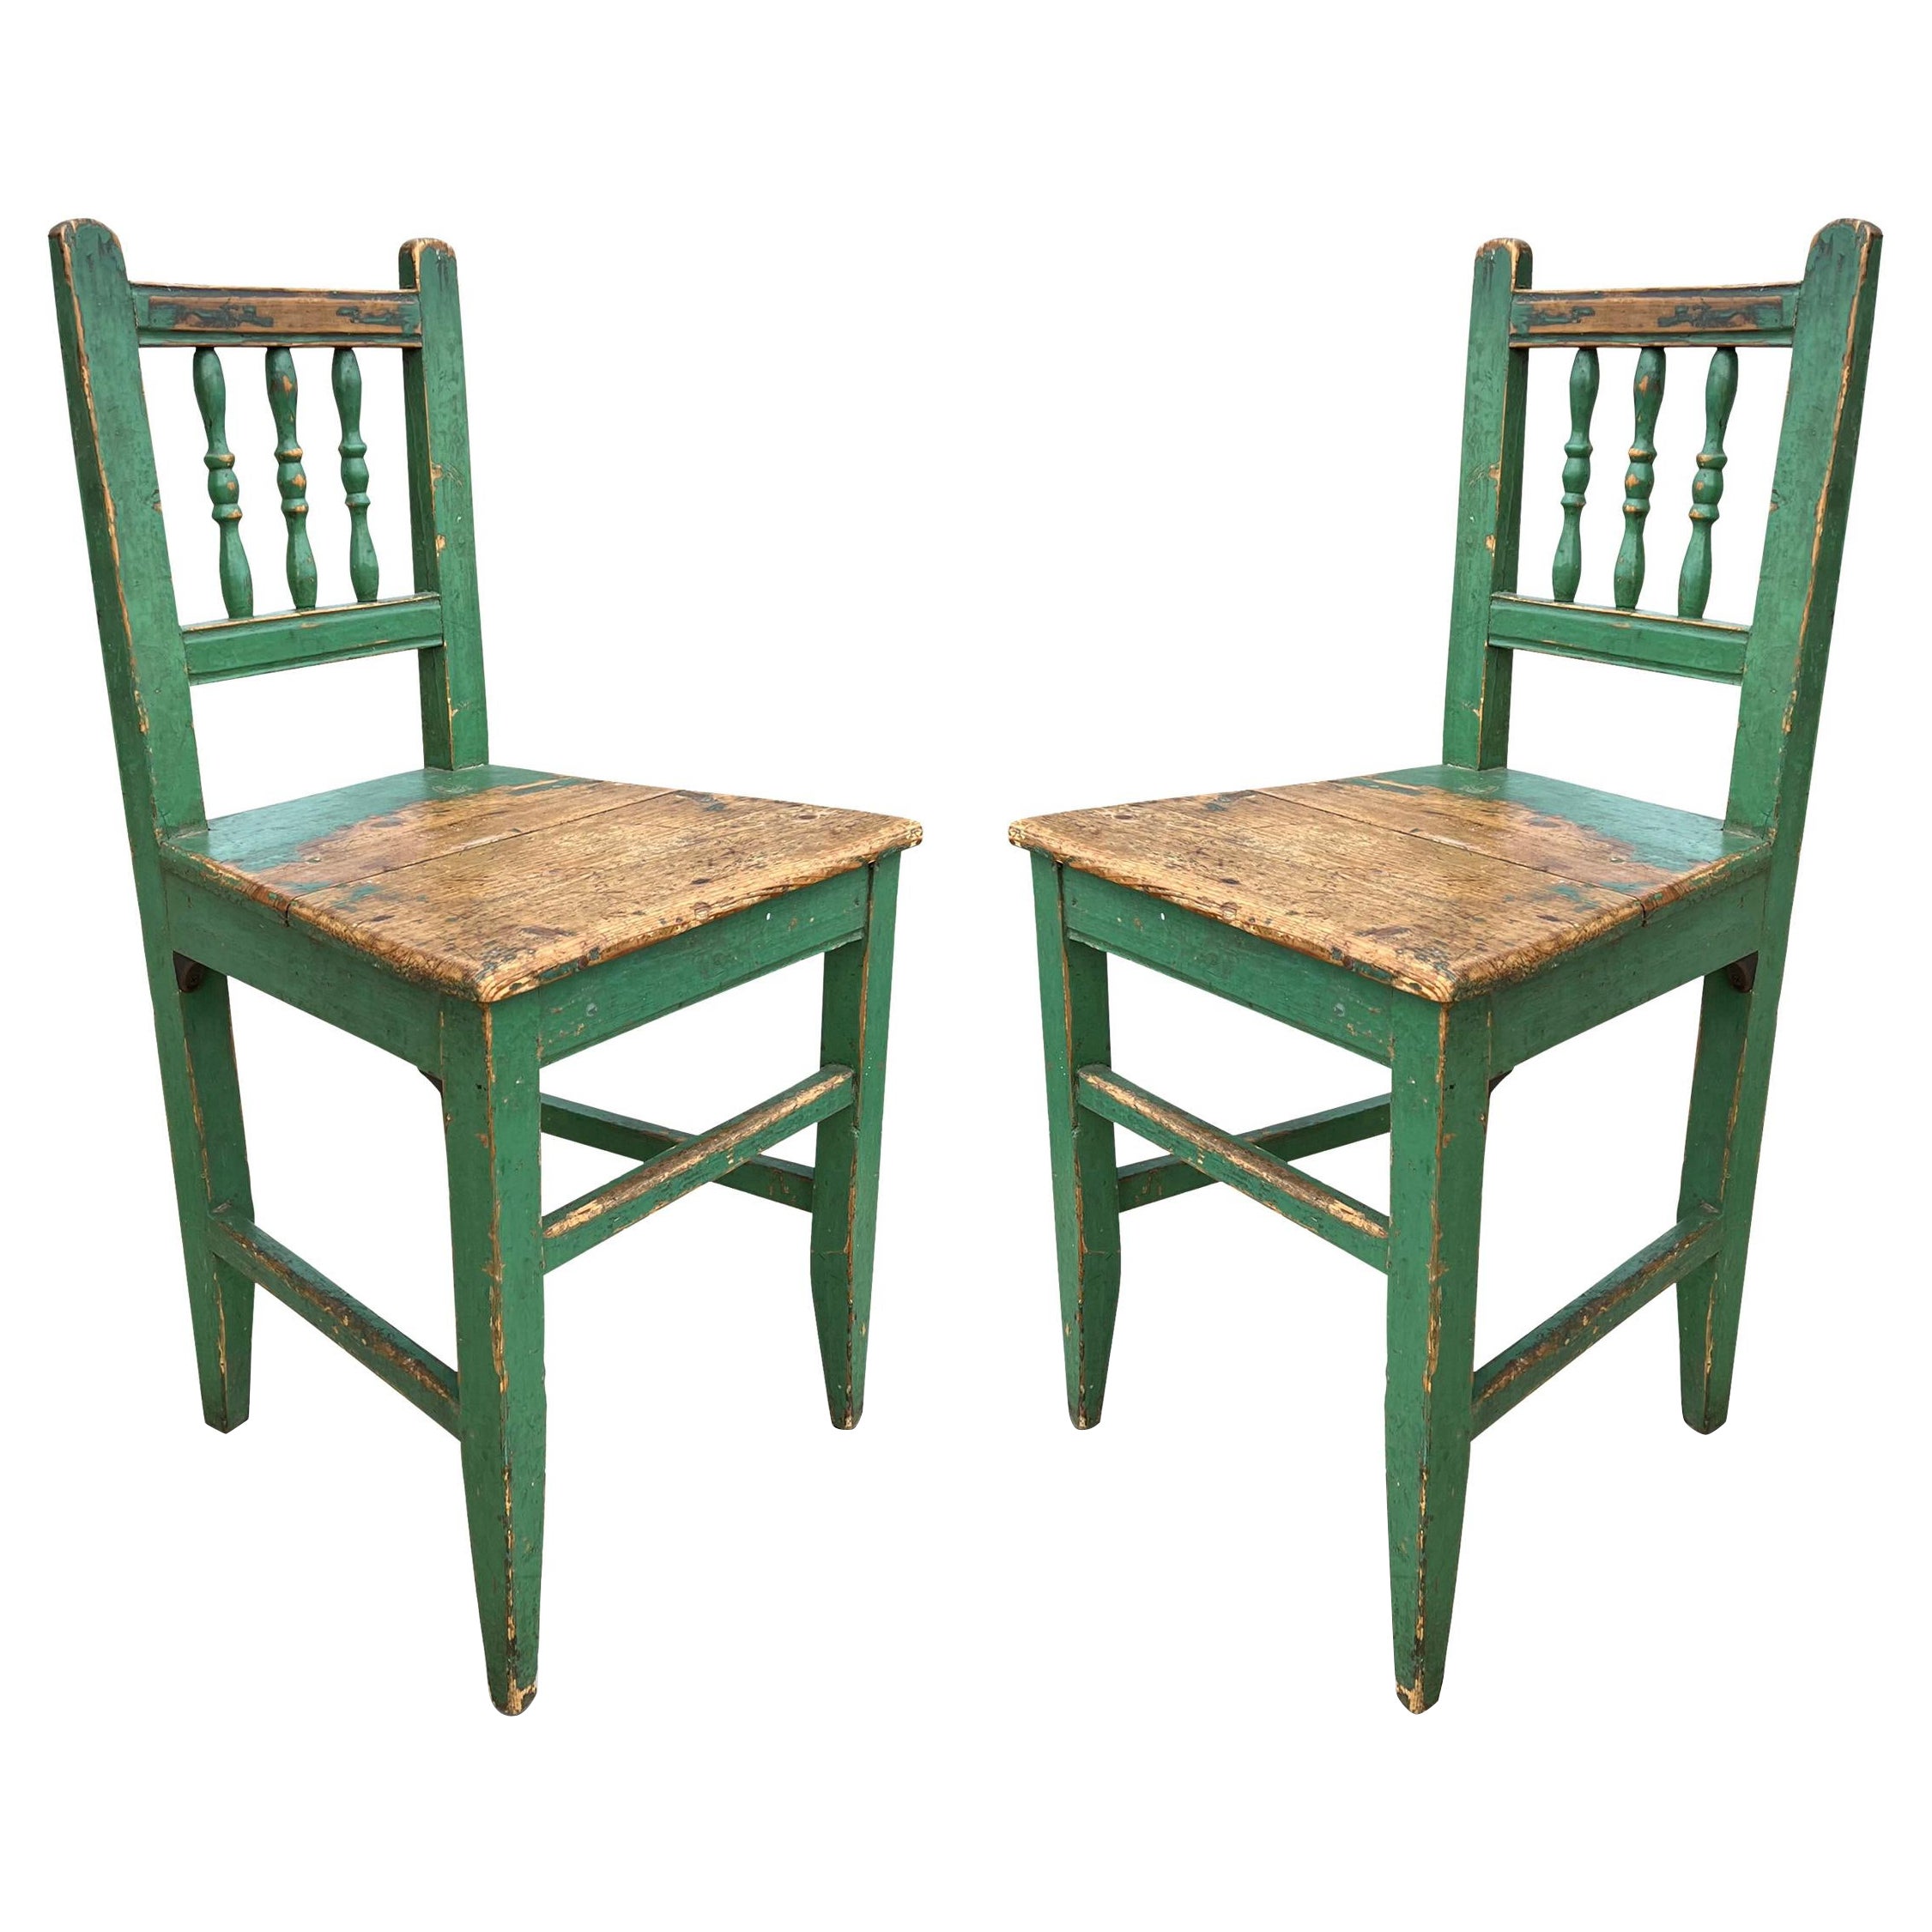 Pair of 19th Century Continental Farm Chairs